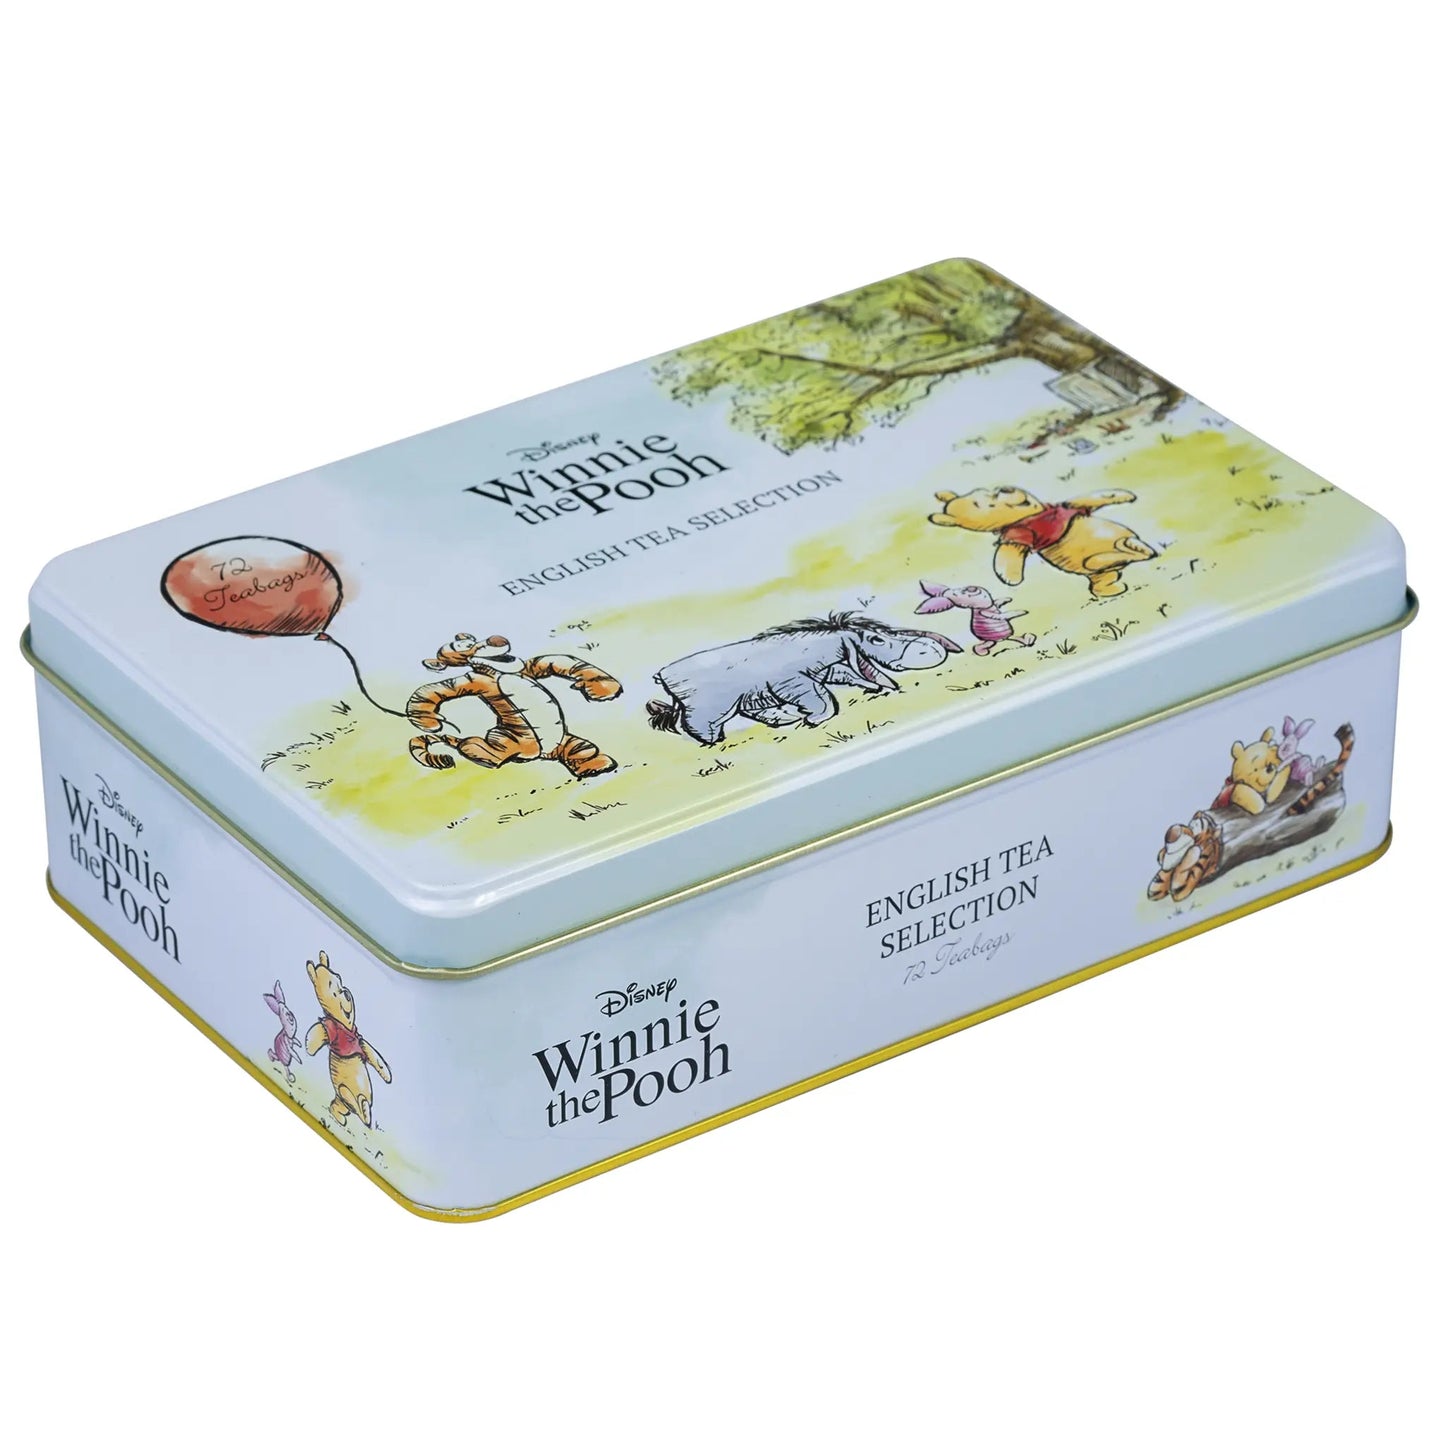 Winnie The Pooh Tea Selection Tin - Tea Gifts - New English Teas